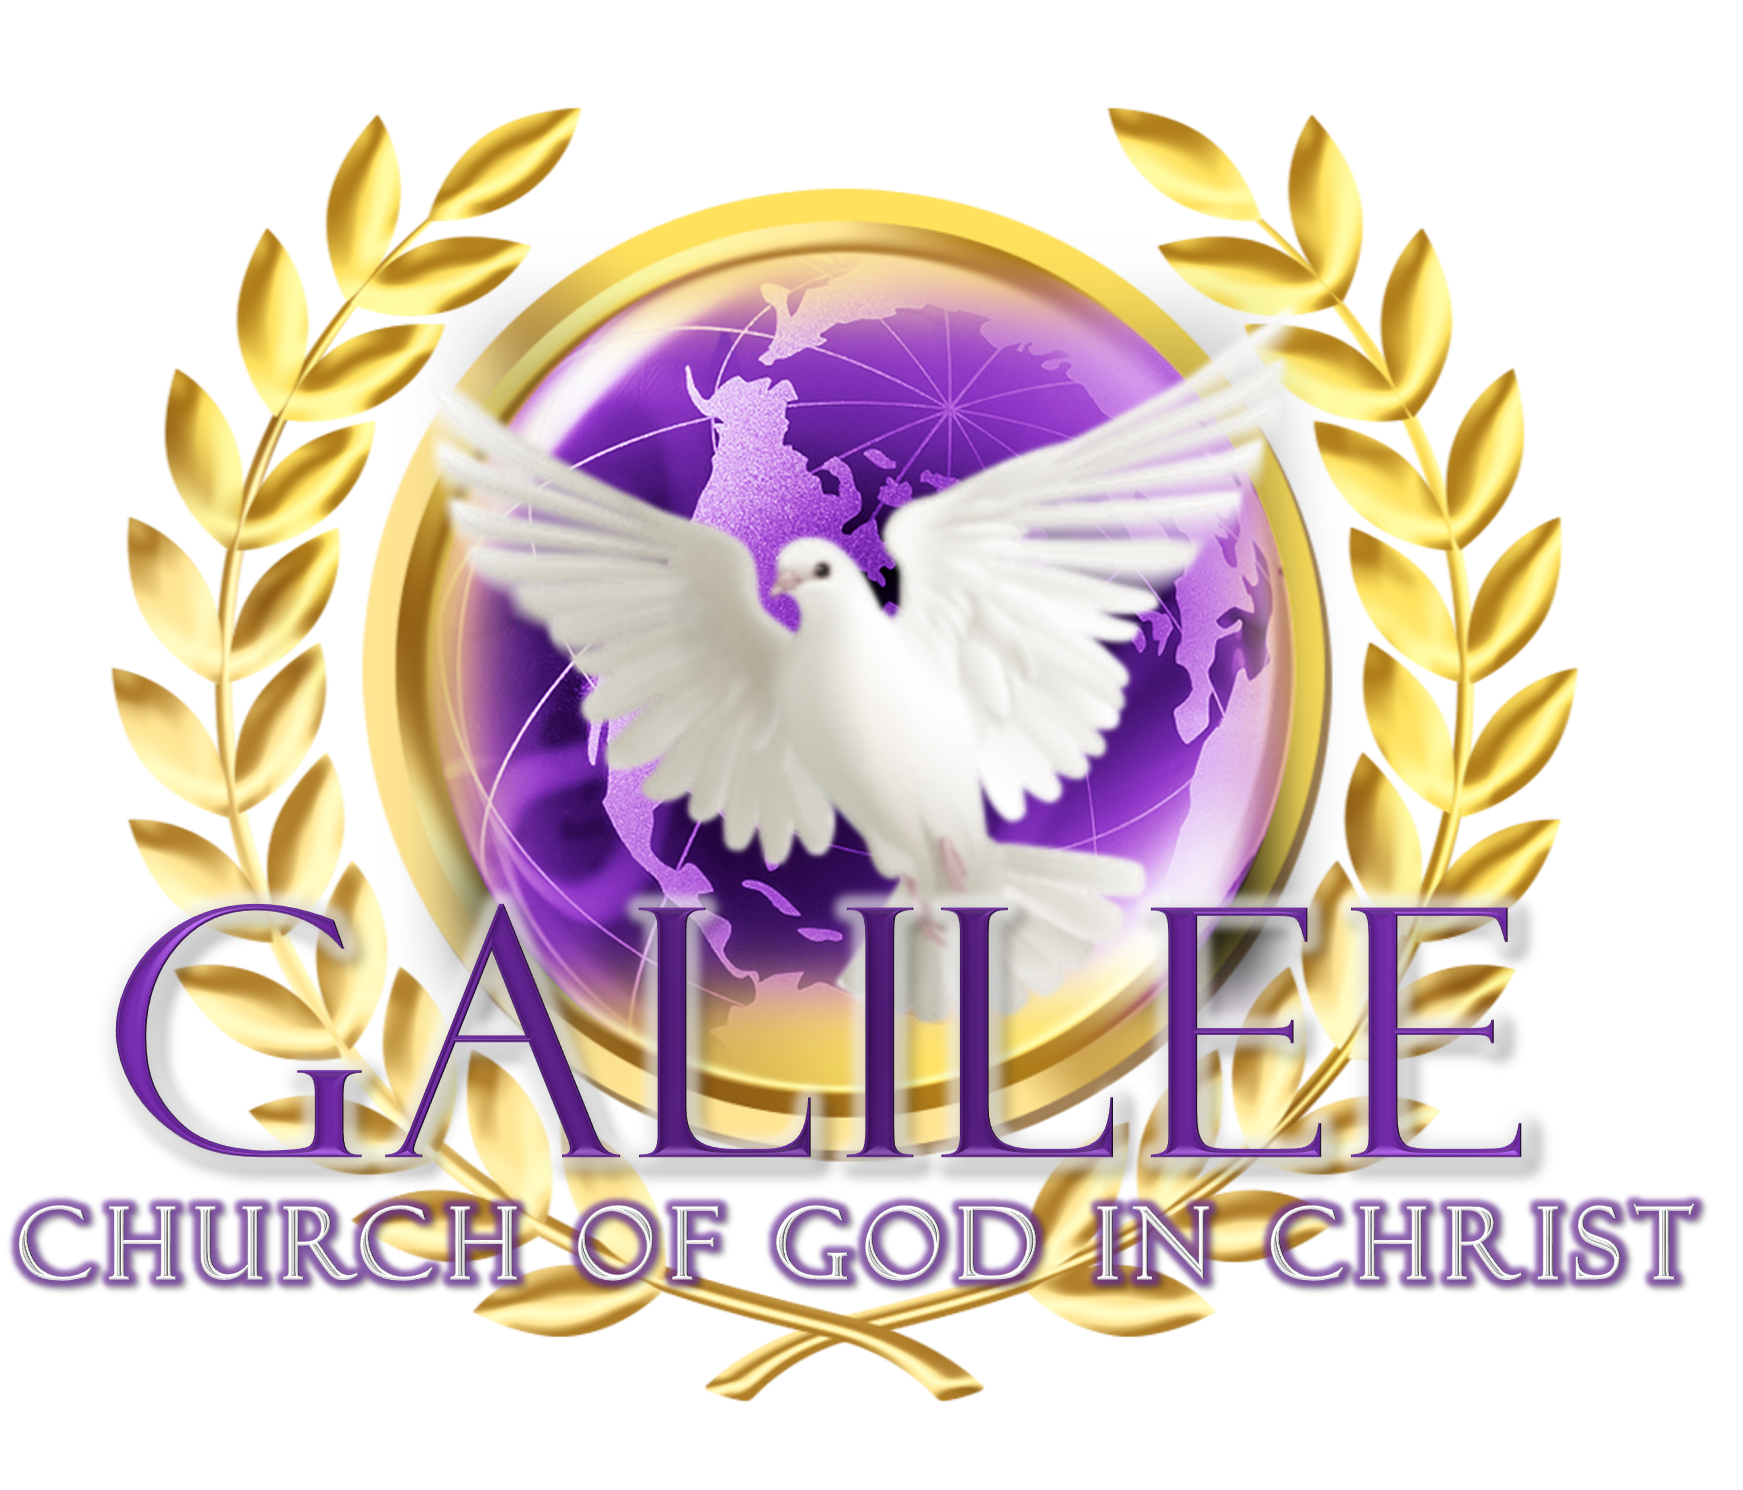 Galilee Church of God In Christ